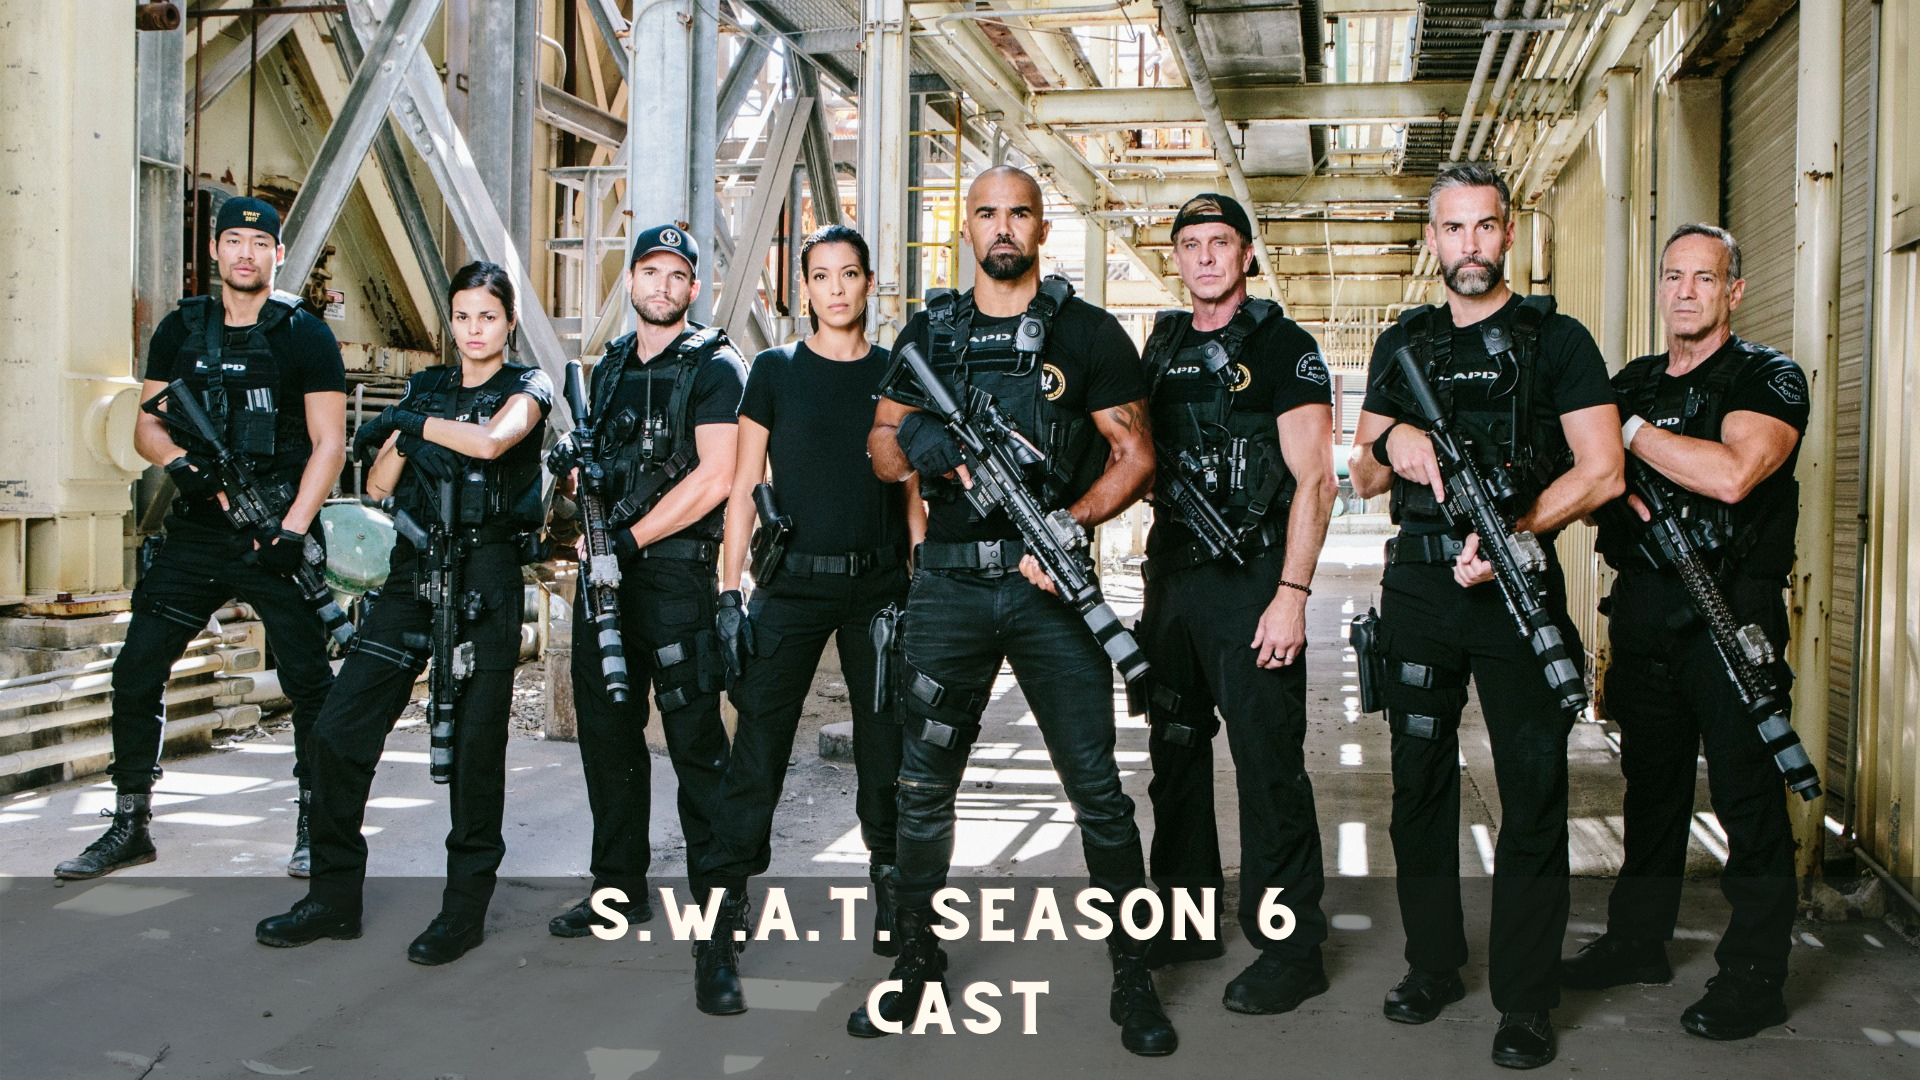 S.W.A.T. Season 6 Cast